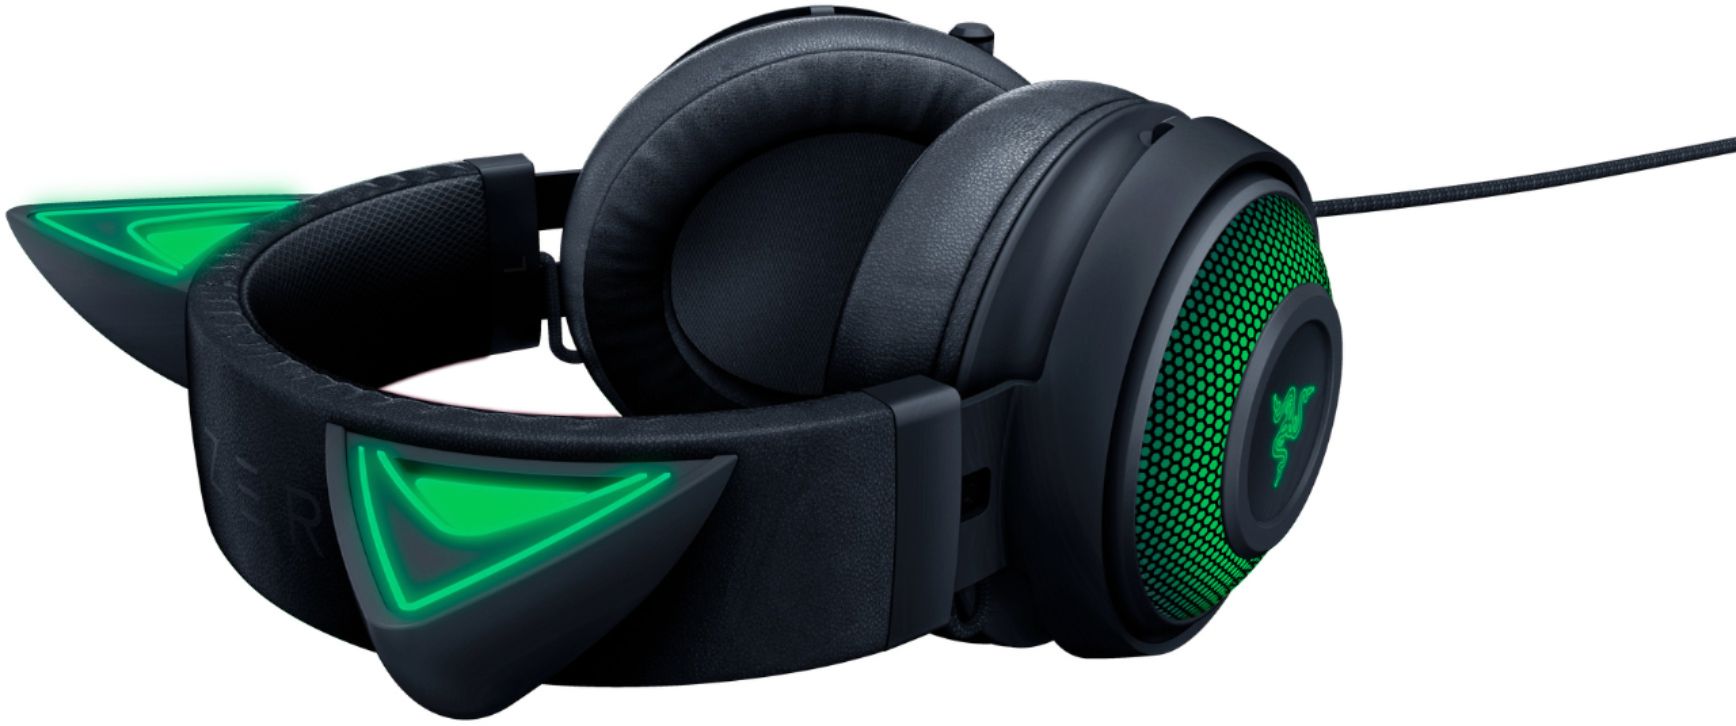 Razer Kraken Kitty Wired Stereo Gaming Headset With Rgb Lighting Black Rz04 R3m1 Best Buy